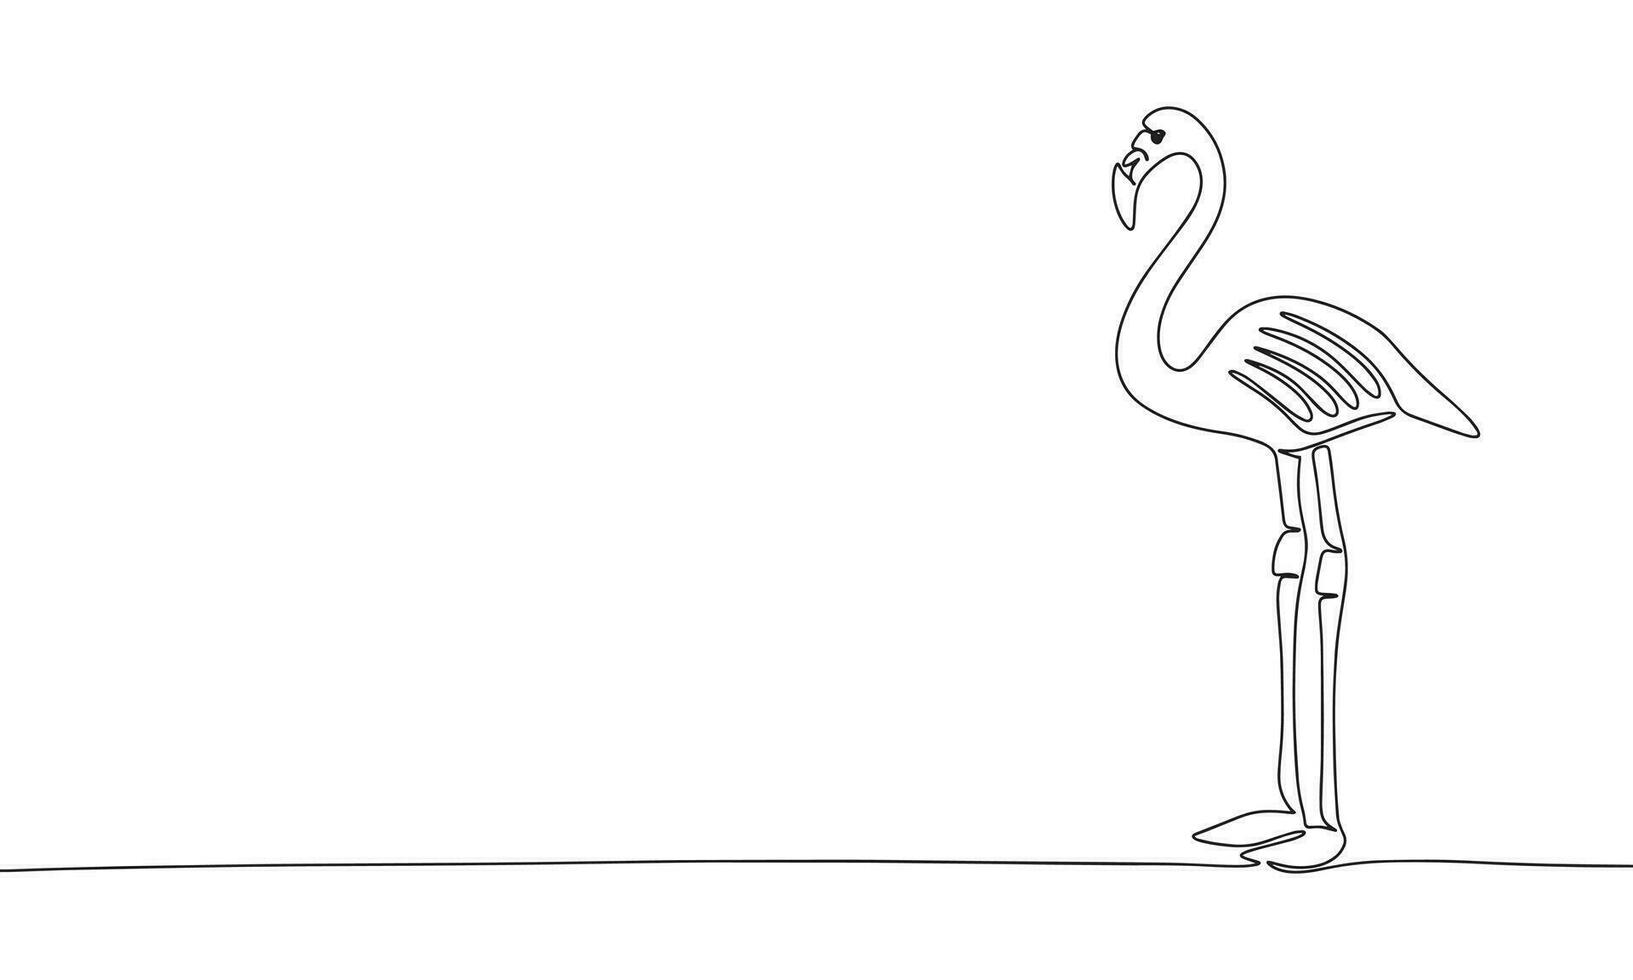 flamenco pájaro. uno línea continuo concepto flamenco estandarte de pájaros línea arte, describir, silueta, vector ilustración.